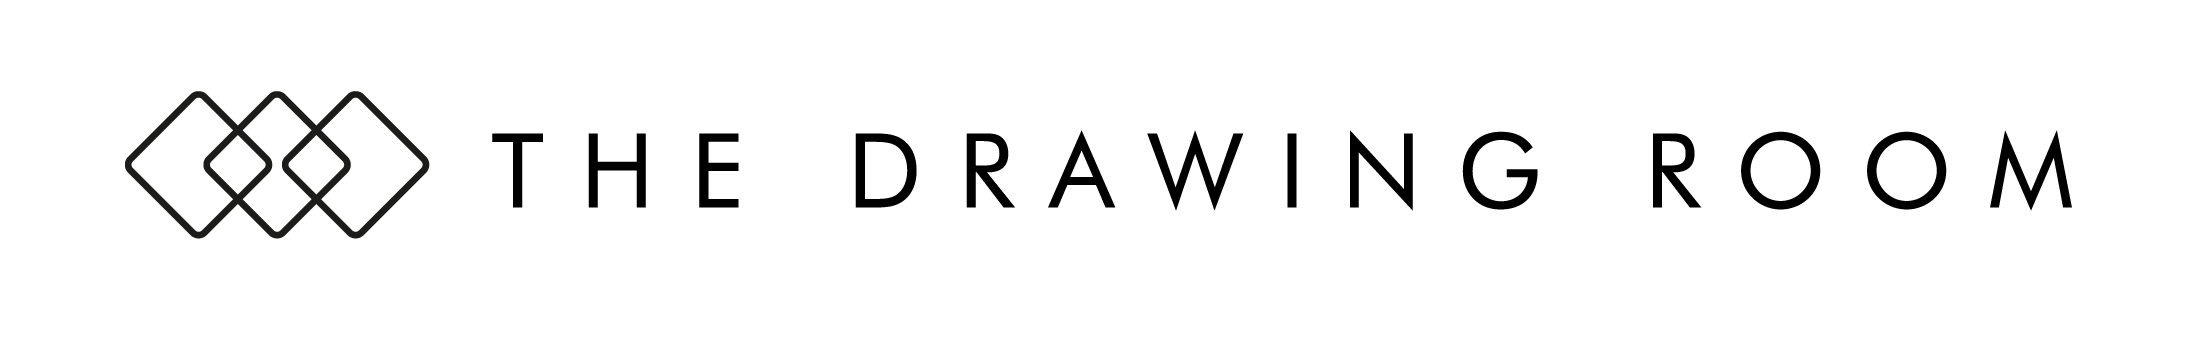 the drawing room logo dark